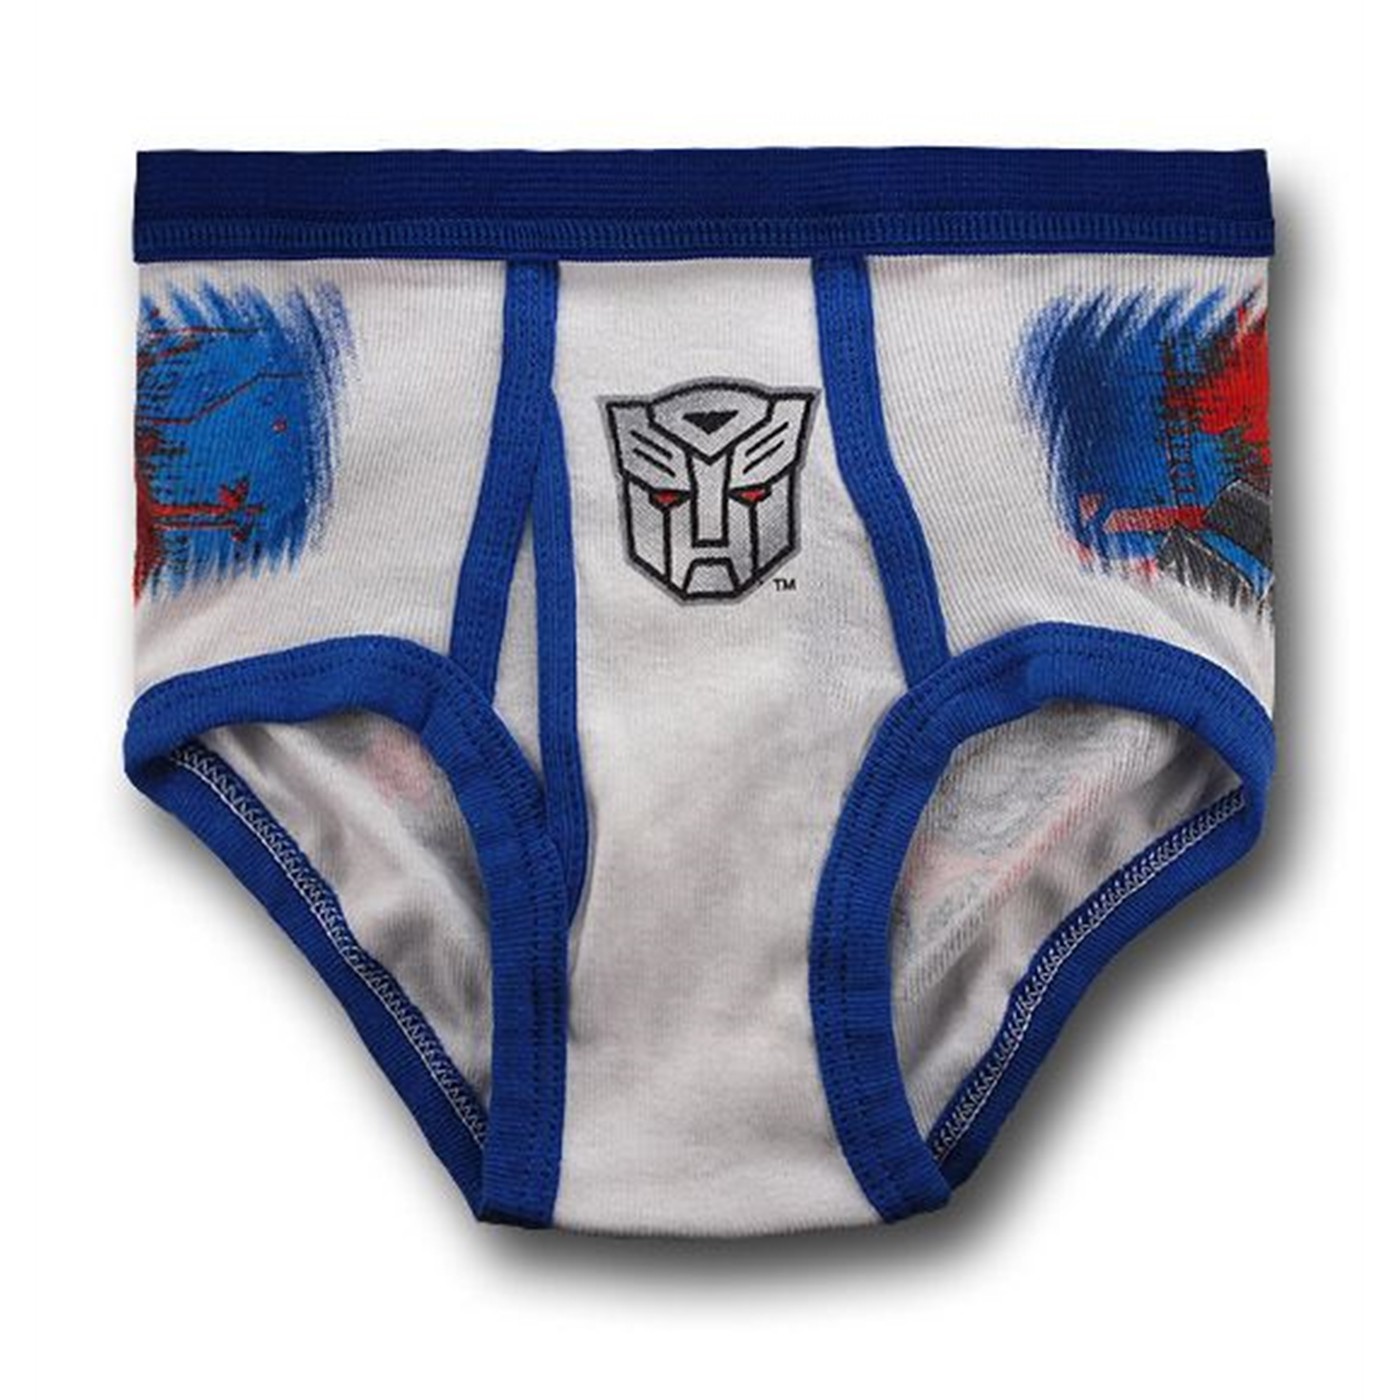 Transformers Juvenile 3-Pack Underwear